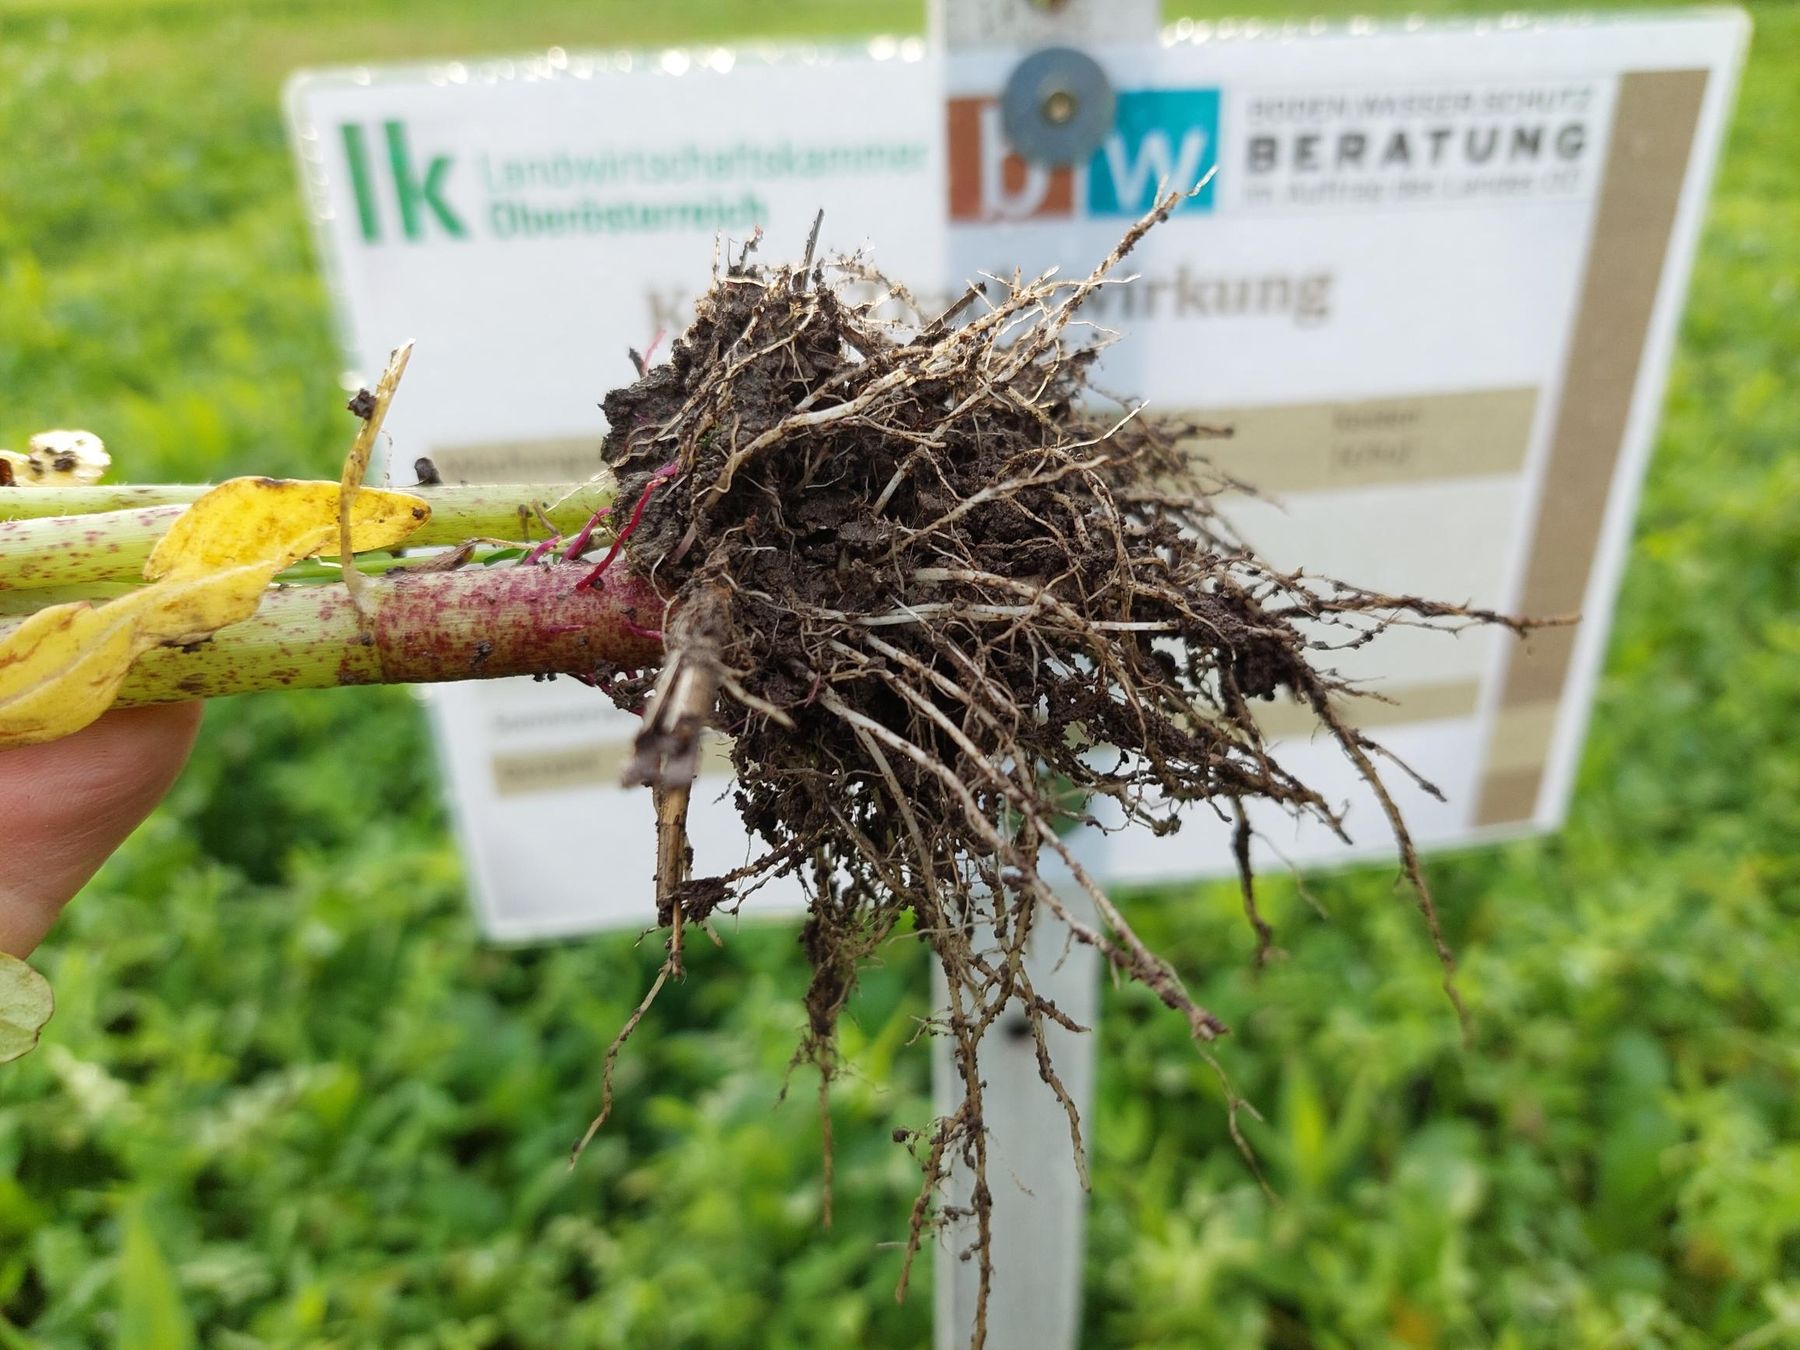 Wurzel von Ramtillkraut, Mungo © BWSB/Wallner